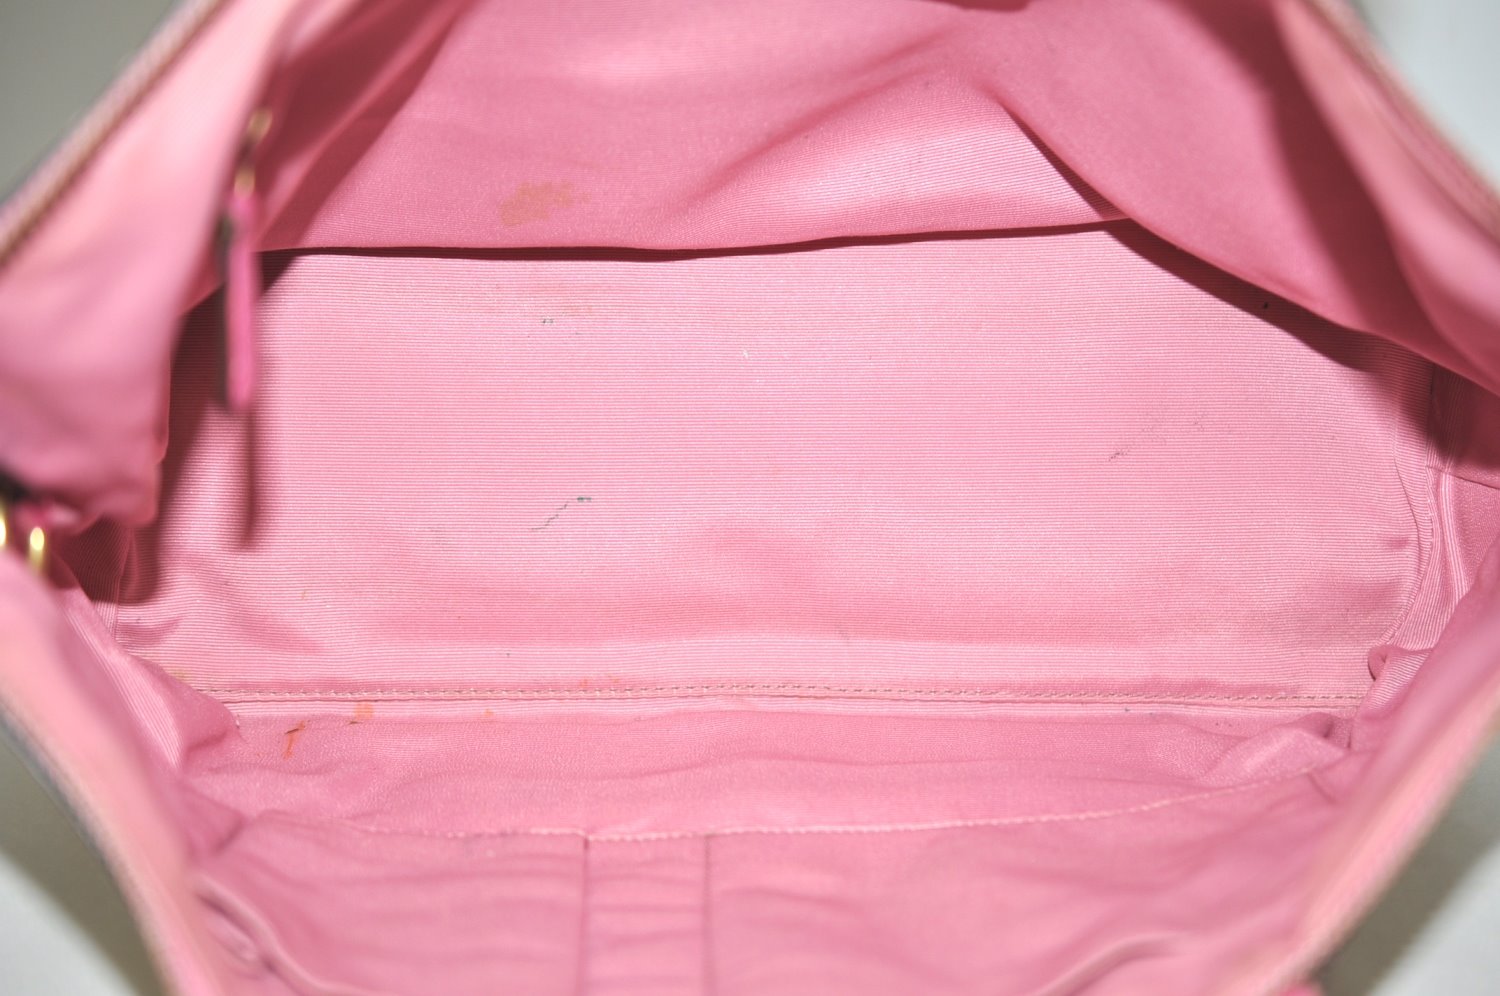 Authentic COACH Signature Shoulder Tote Bag Canvas Leather Brown Pink K5030